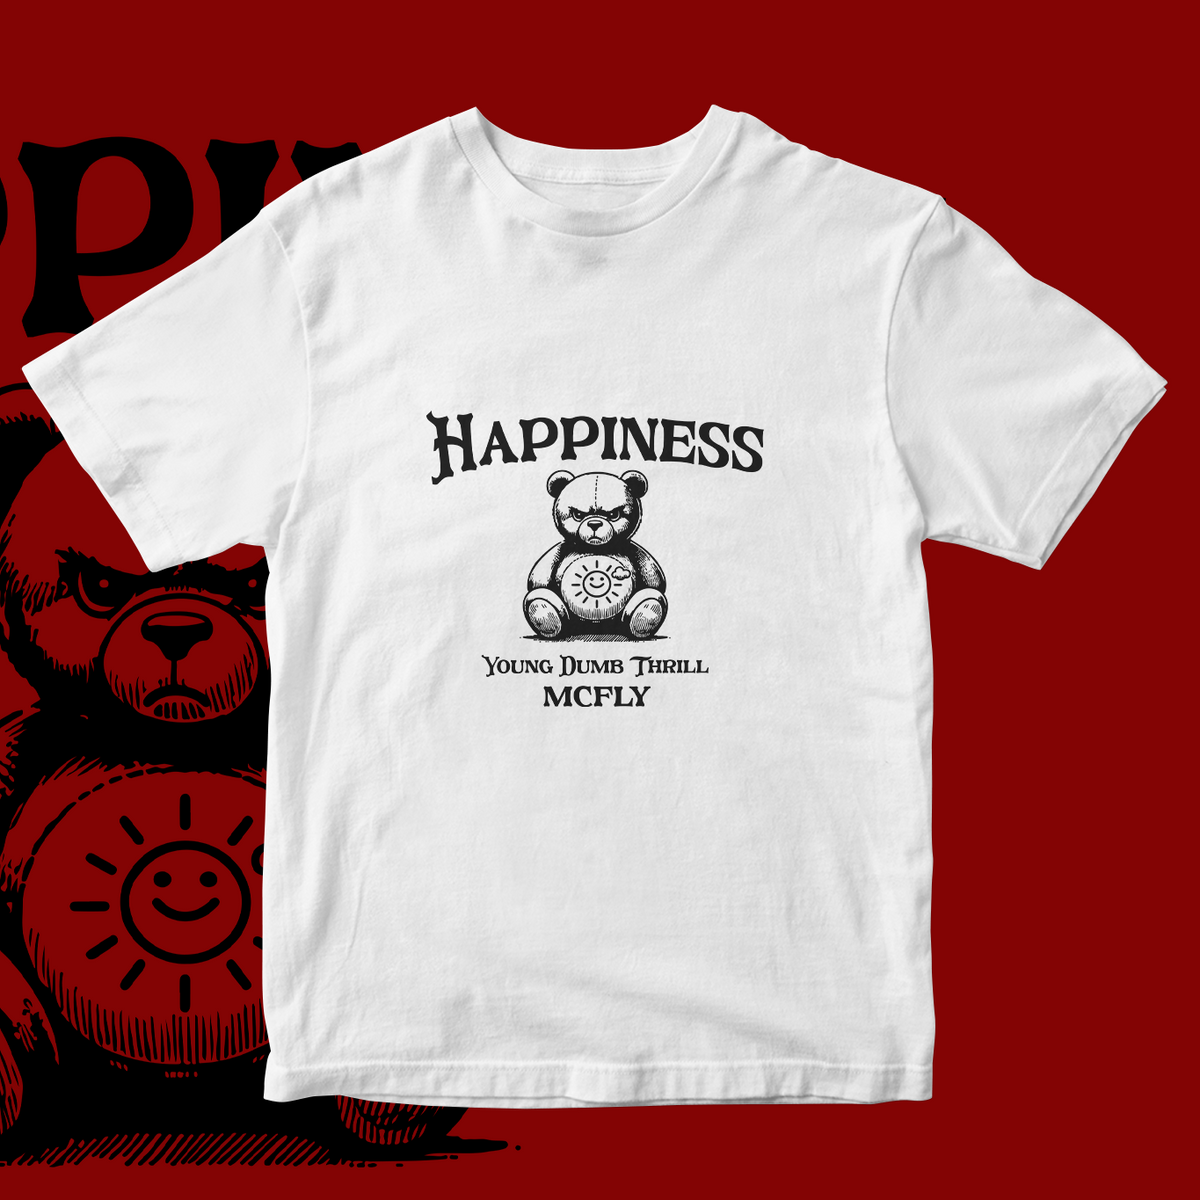 Nome do produto: Mcfly - Happiness